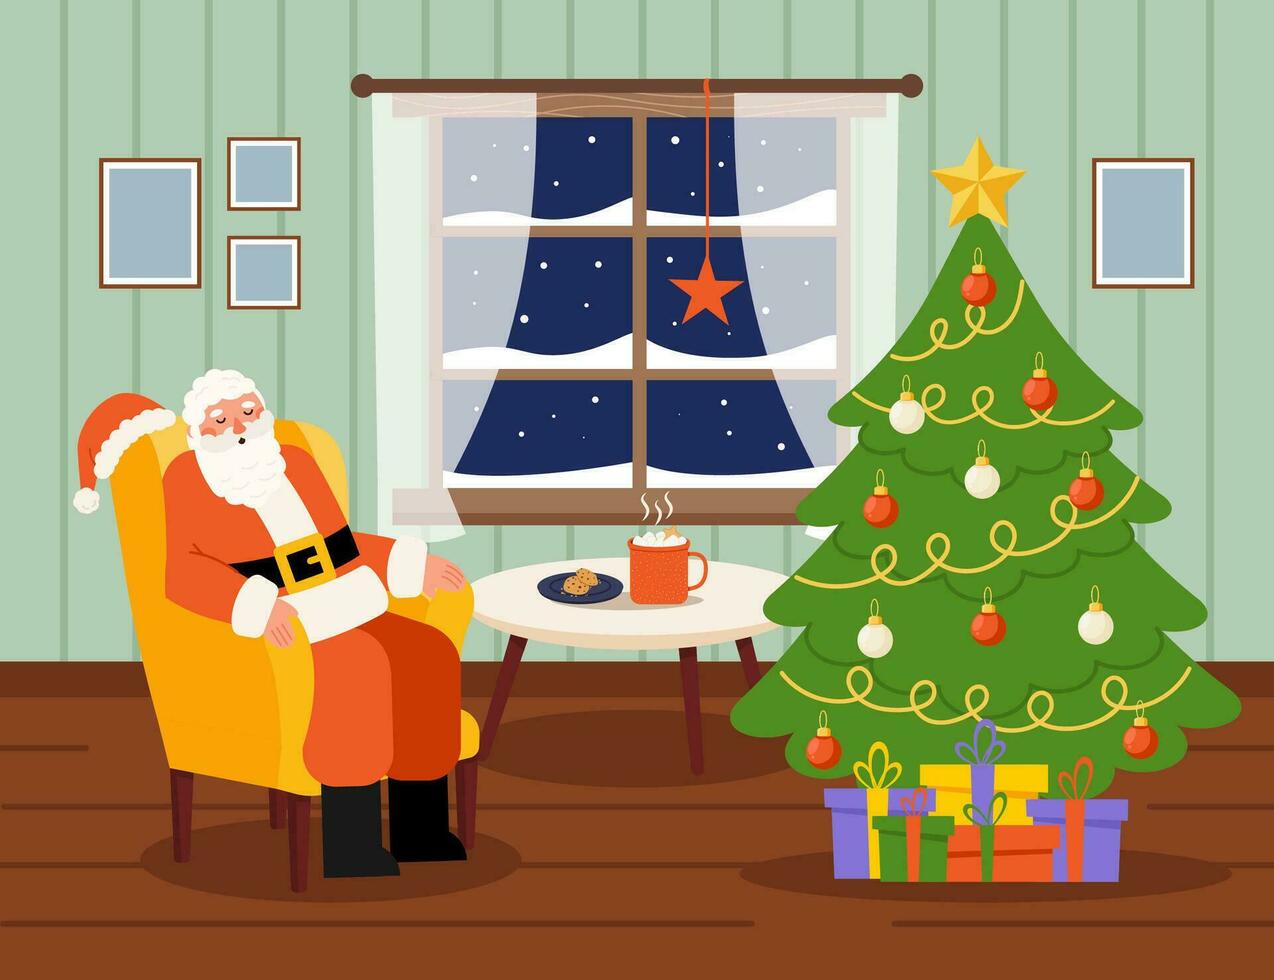 Christmas rustic living room interior with Christmas tree, Santa Claus, window vector